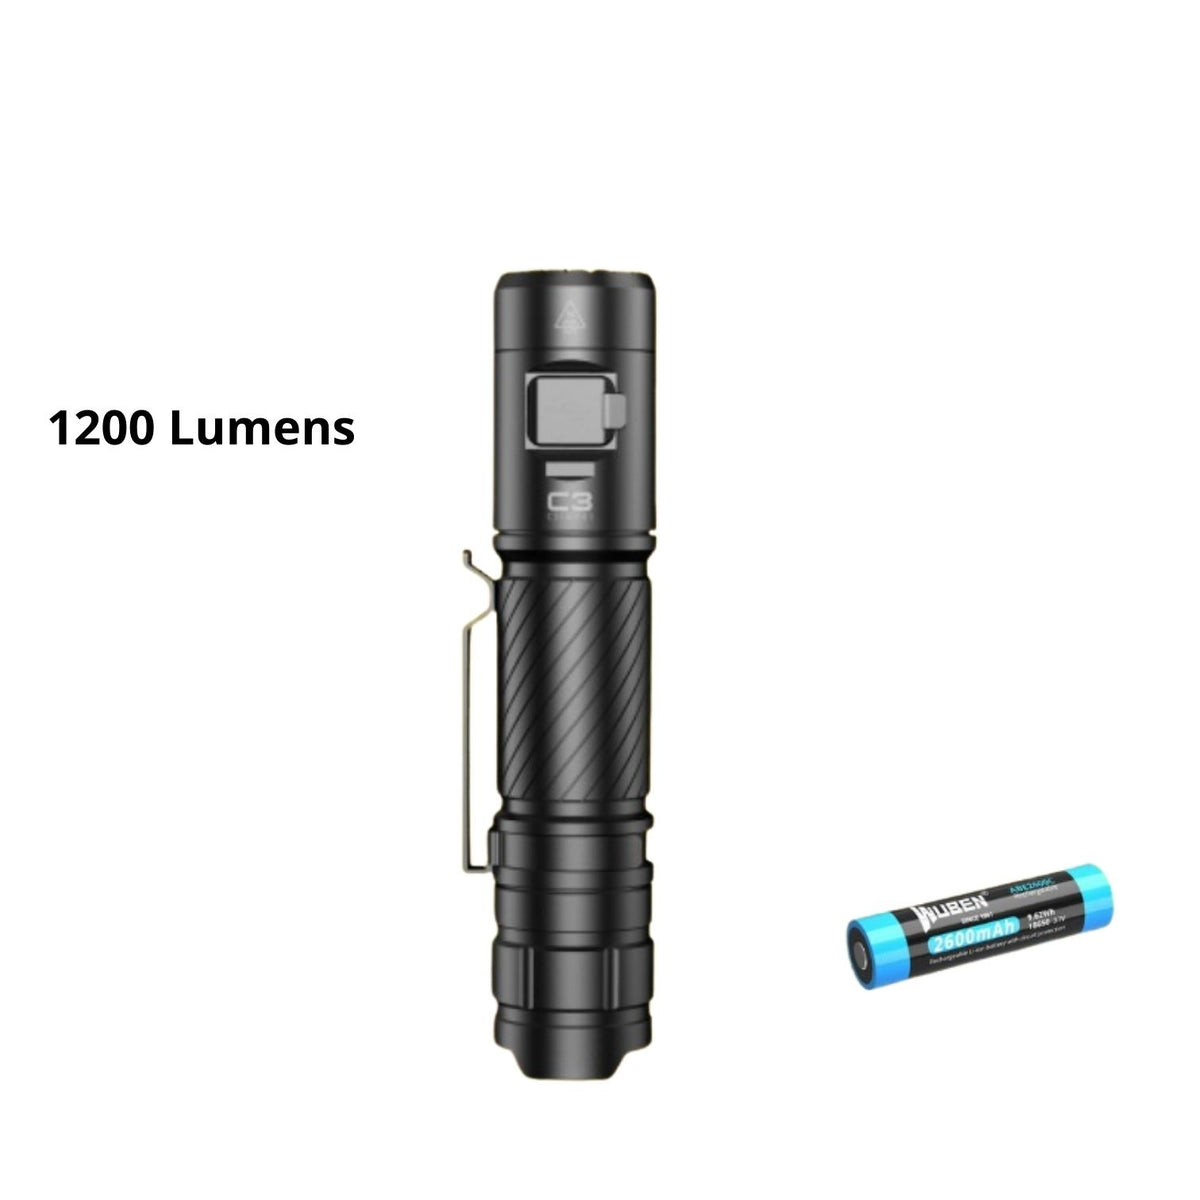 New Wuben E10 1200 Lumens LED Flashlight Torch